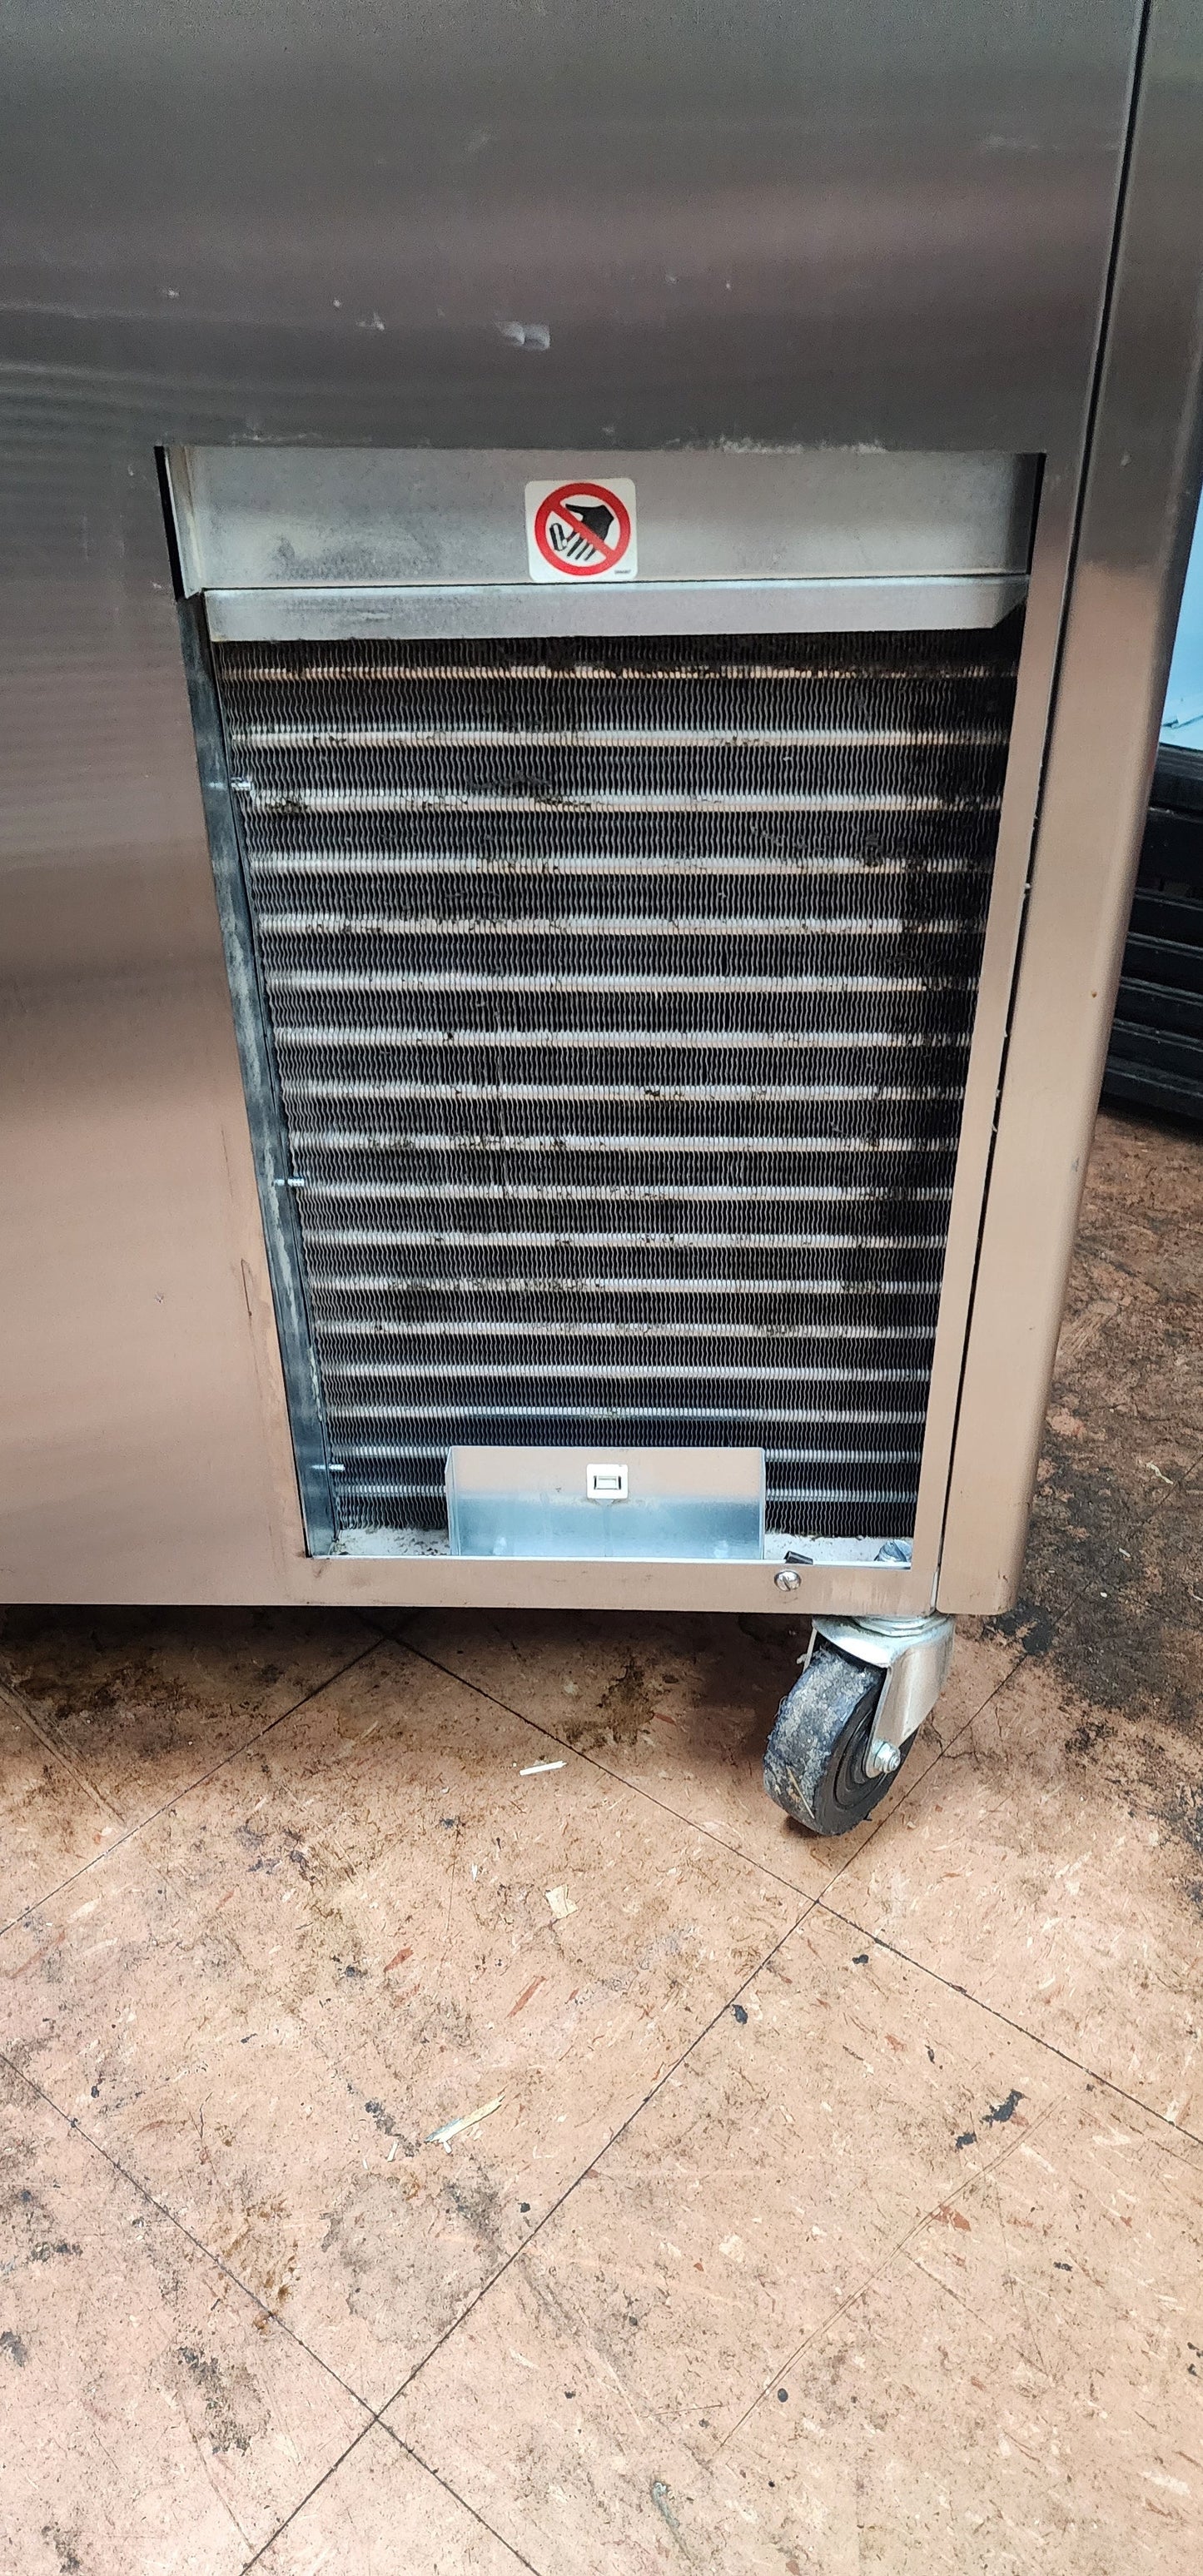 2020 Taylor C717-27 Soft Serve Freezer Twist Air Cooled Ice Cream Machine 1-Phase N0093611 - JS